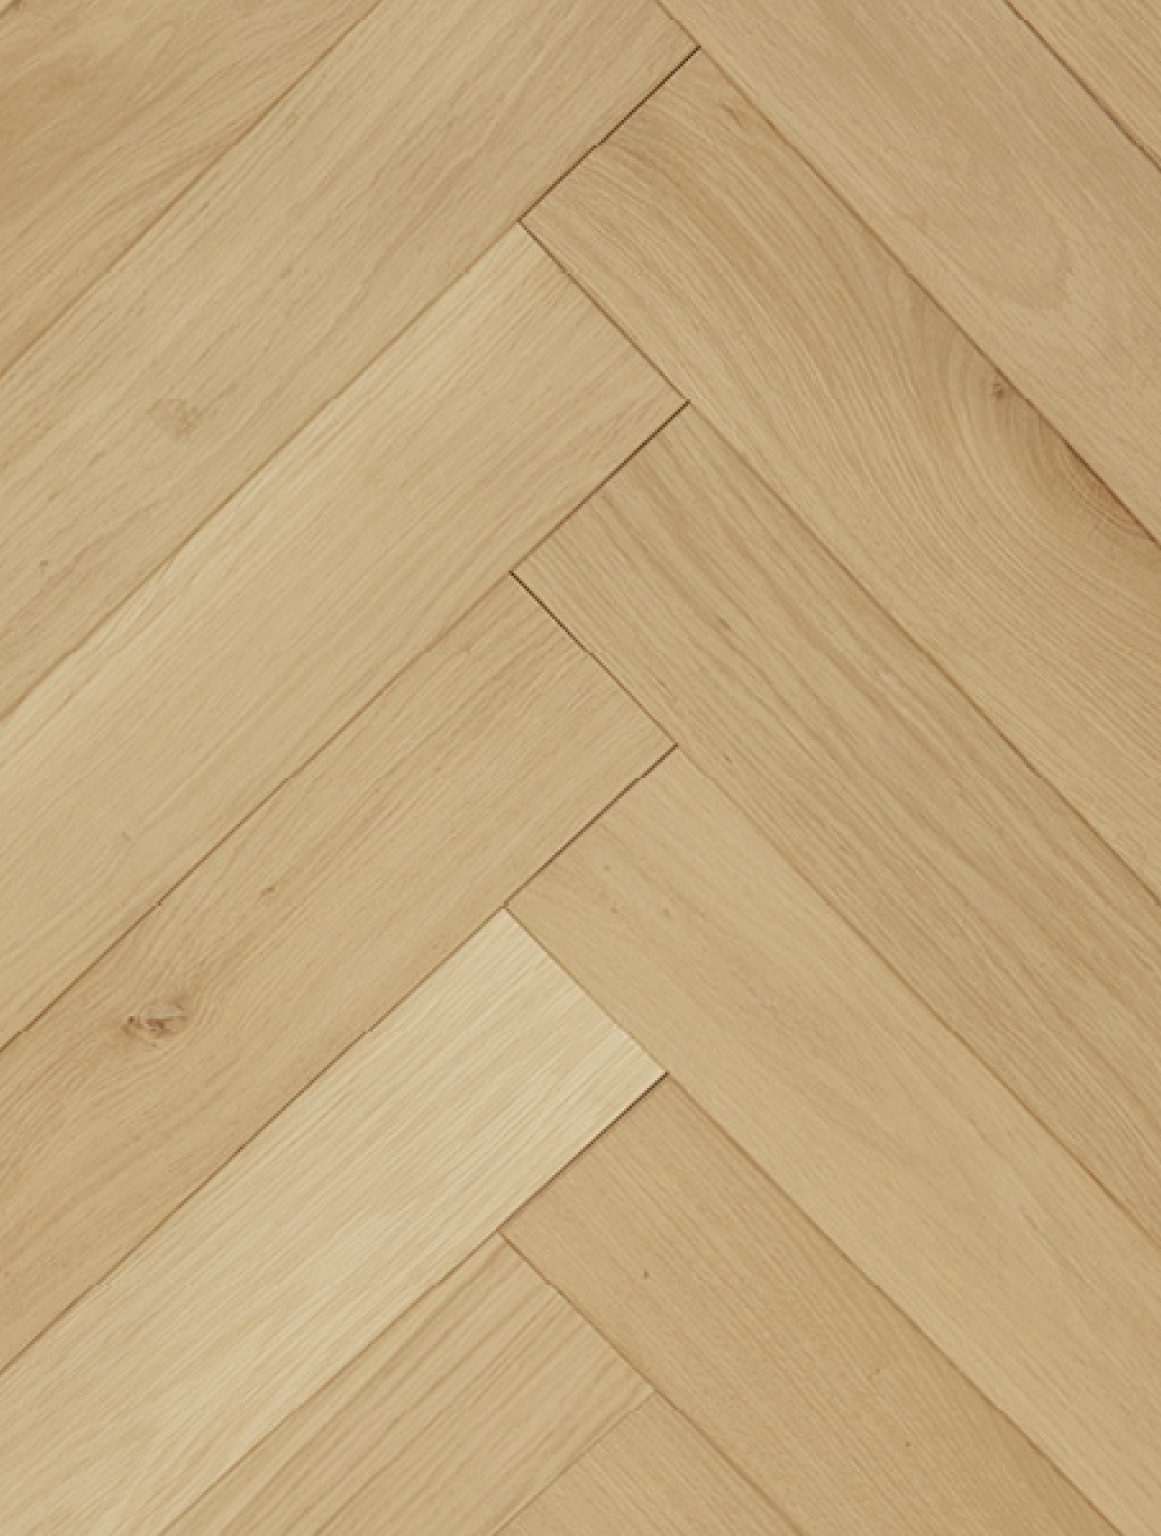 Raw Engineered Herringbone Wood Floors